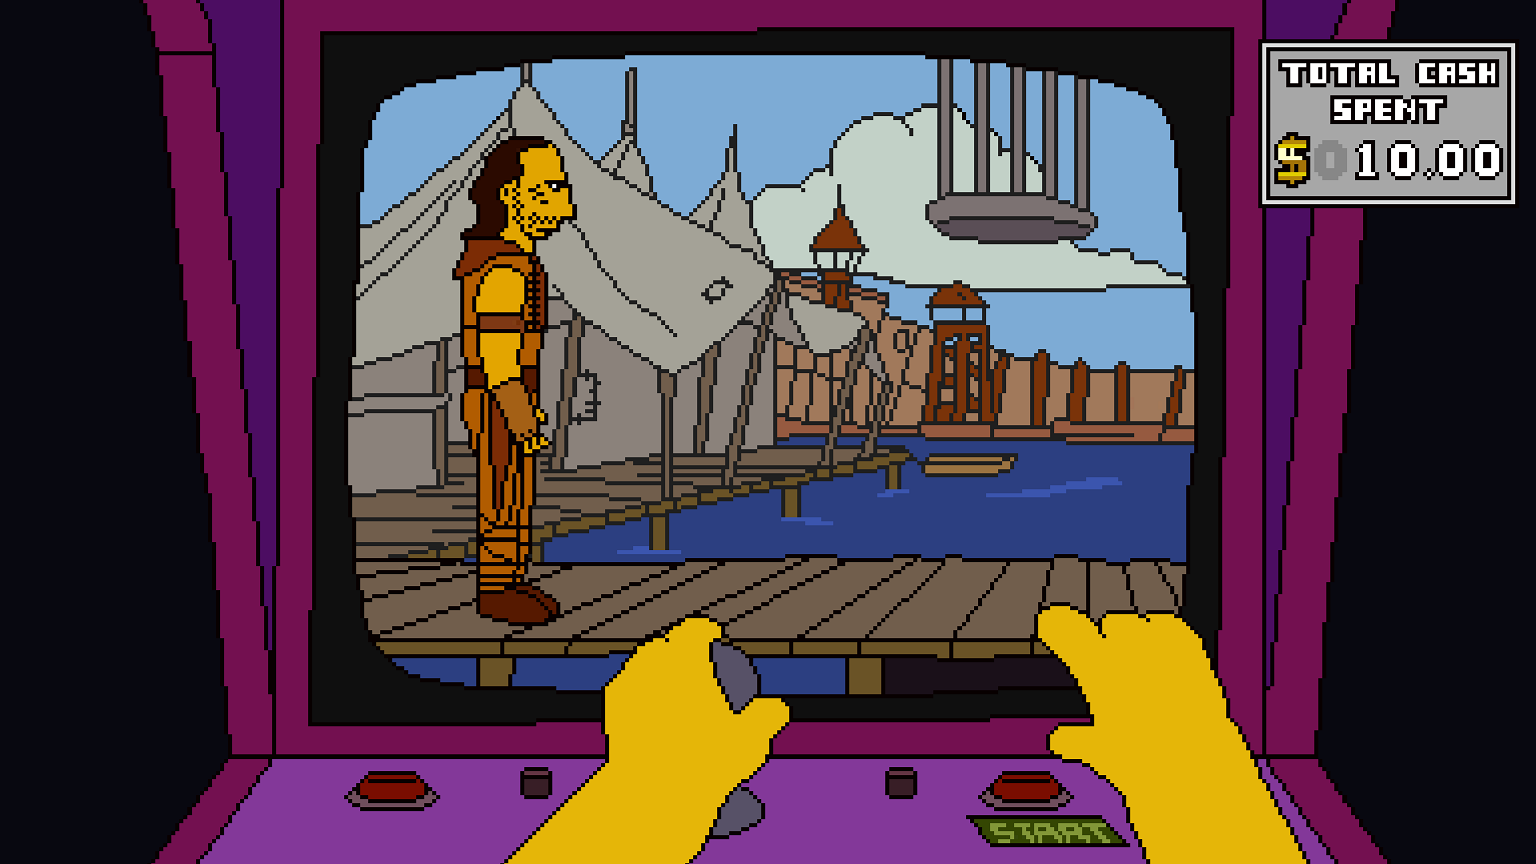 Simpsons Kevin Costner Waterworld Game